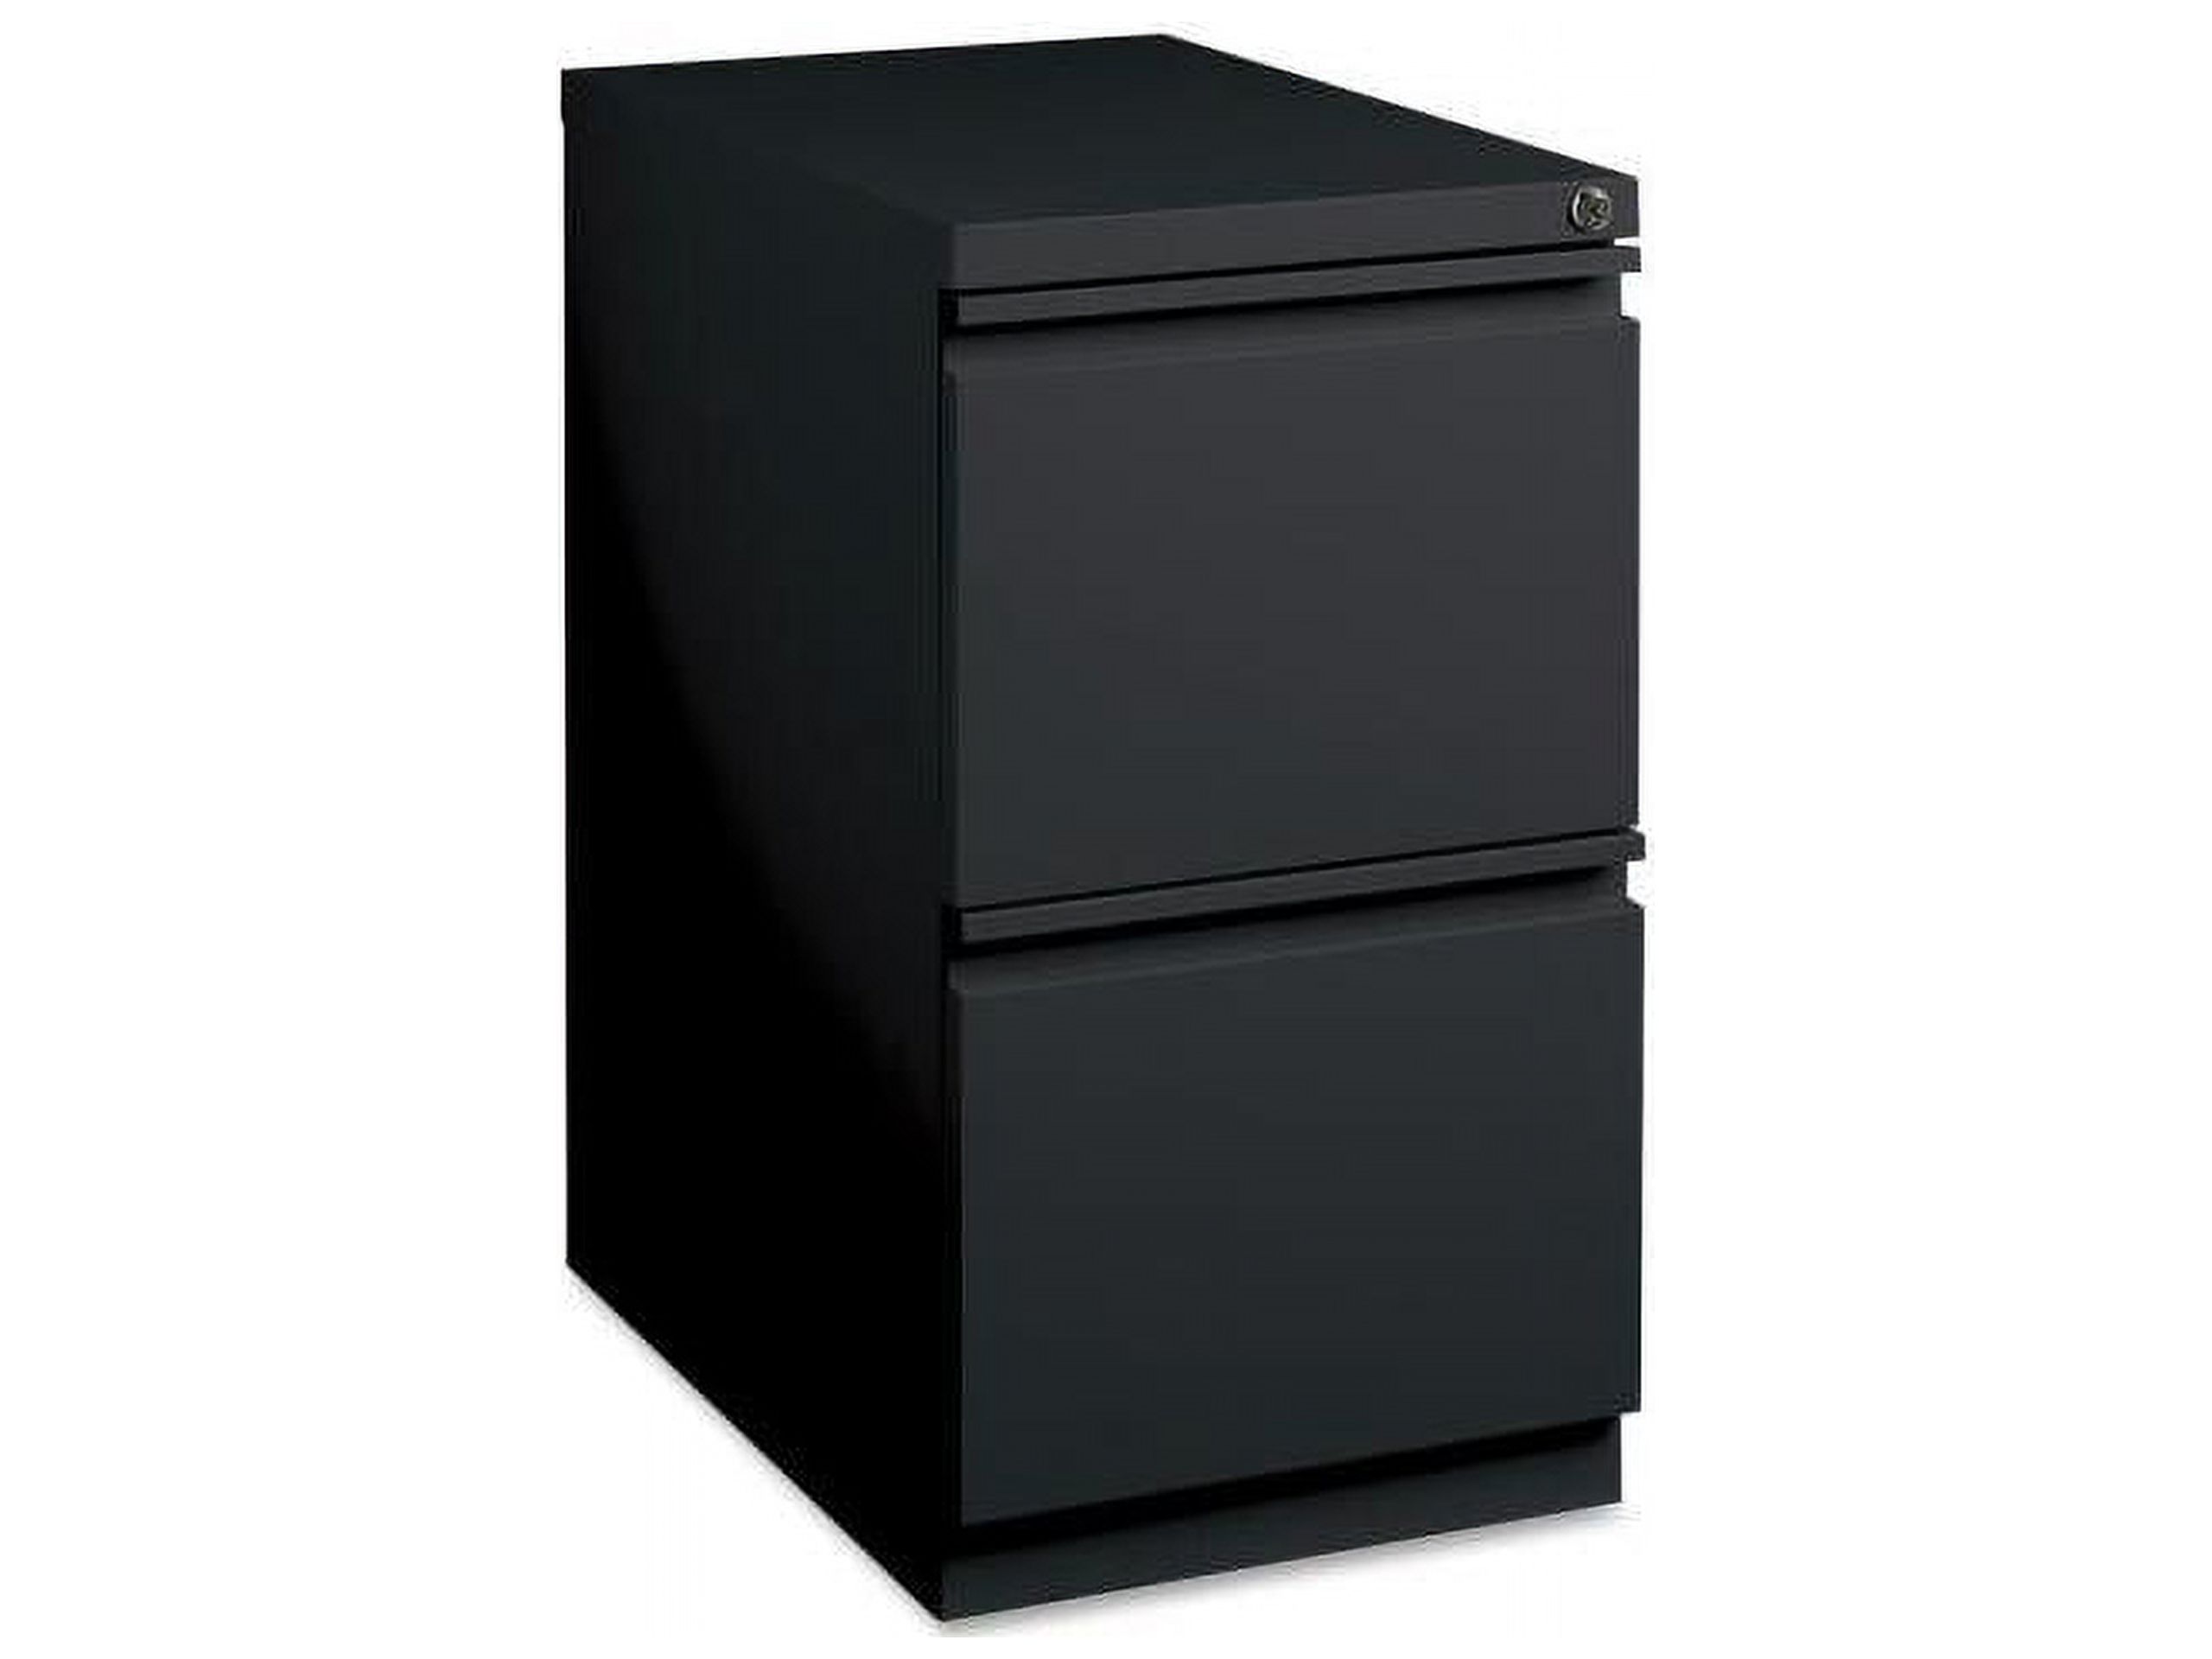 2 Drawers Vertical Steel Lockable Filing Cabinet, Black - image 3 of 12